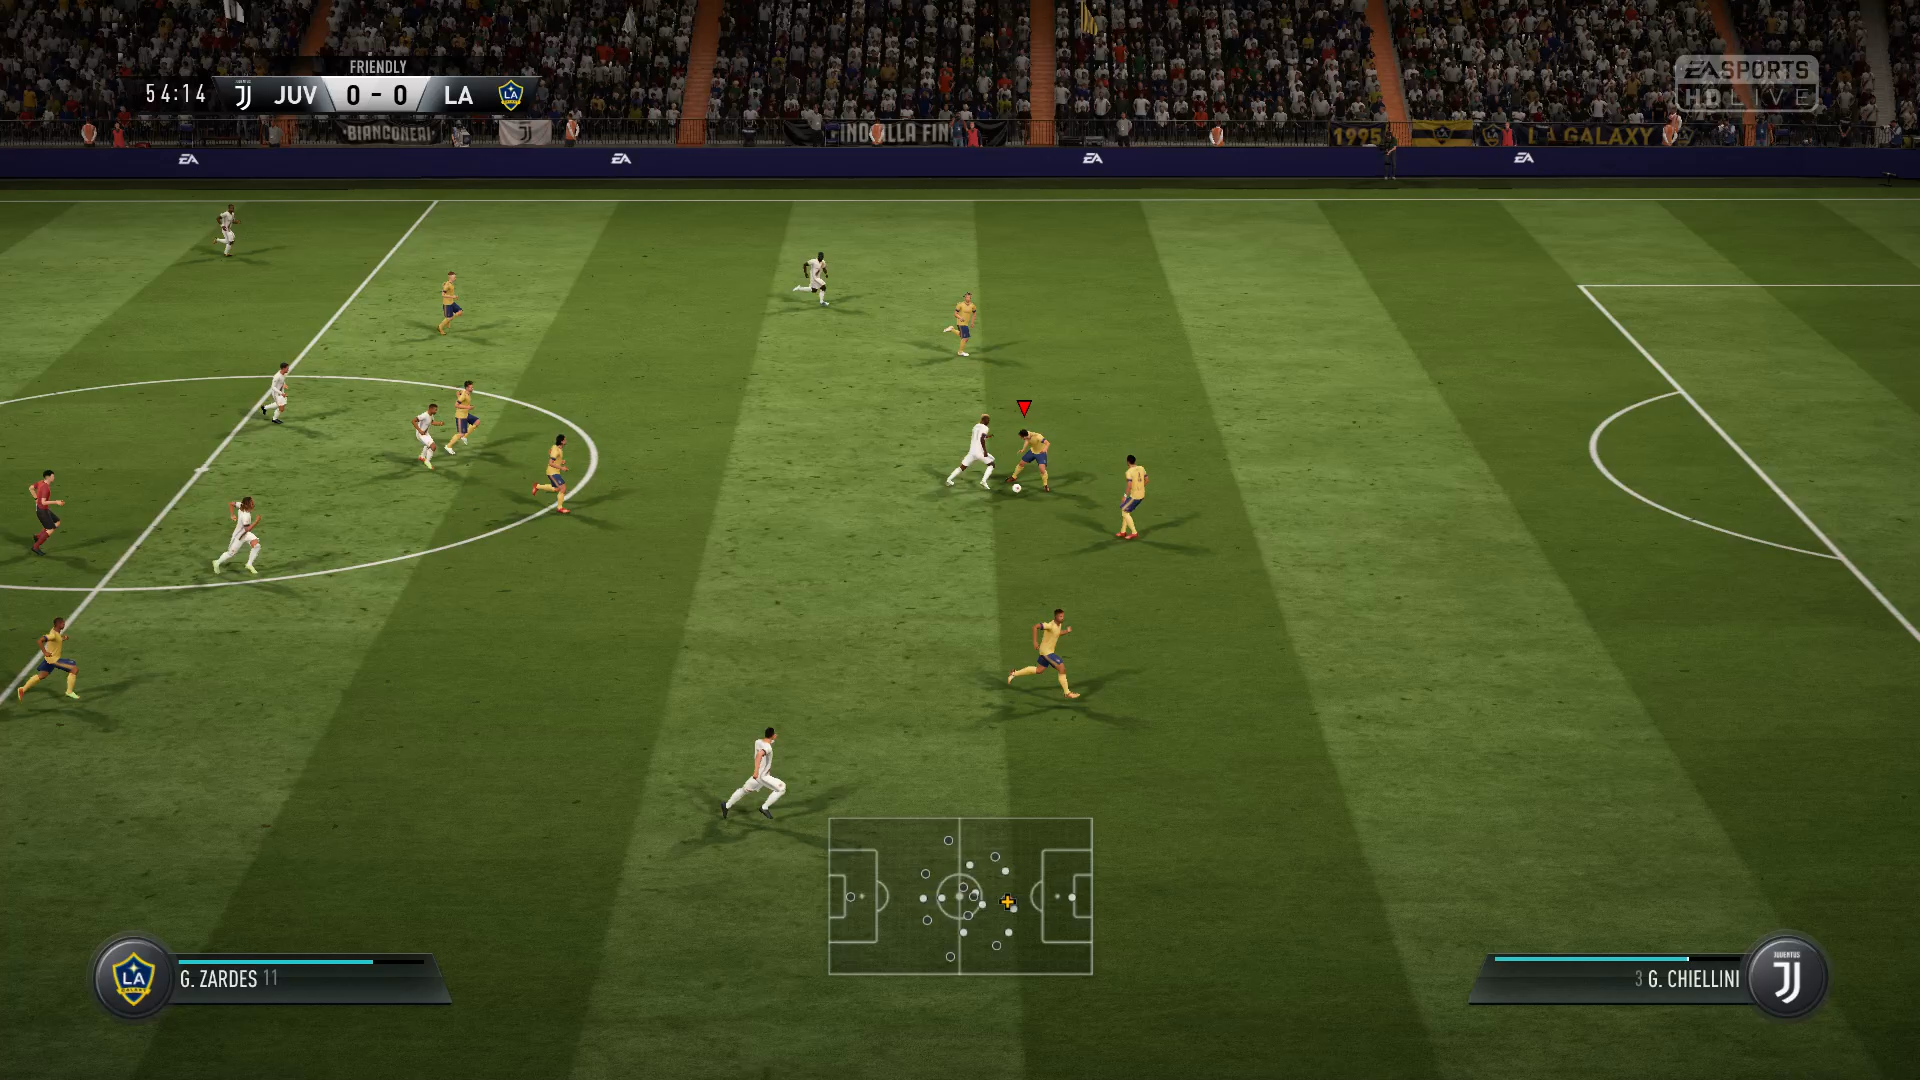 FIFA 18 2017 tournament screenshot 09 15 14 46 13